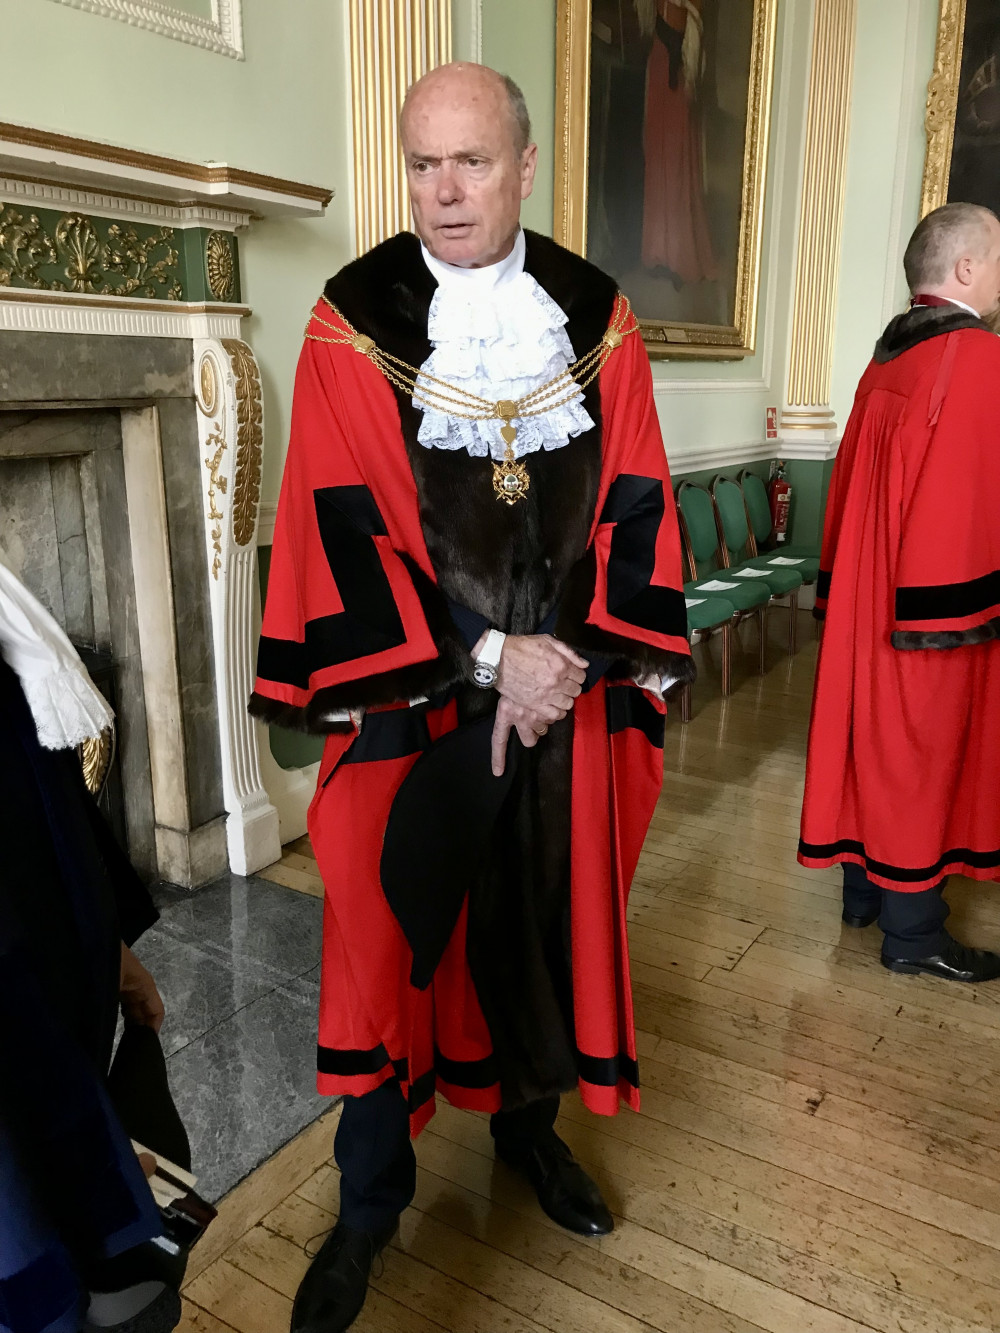 Cllr Steart Cursley - the 648th Mayor of Wells